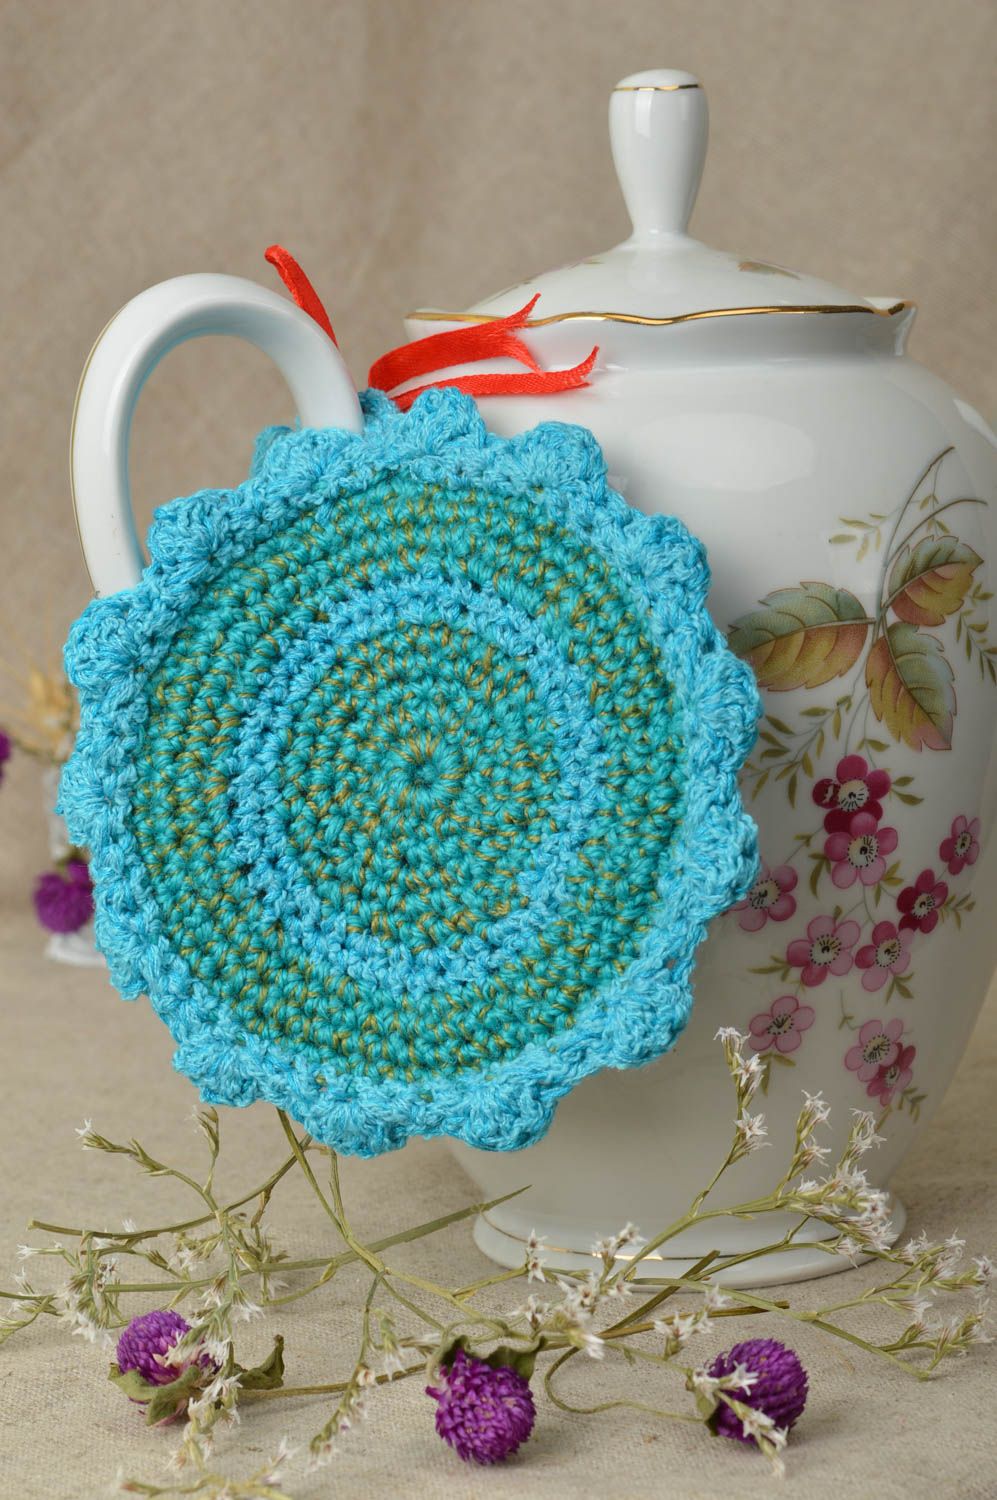 Beautiful handmade crochet potholder home textiles kitchen design gift ideas photo 1